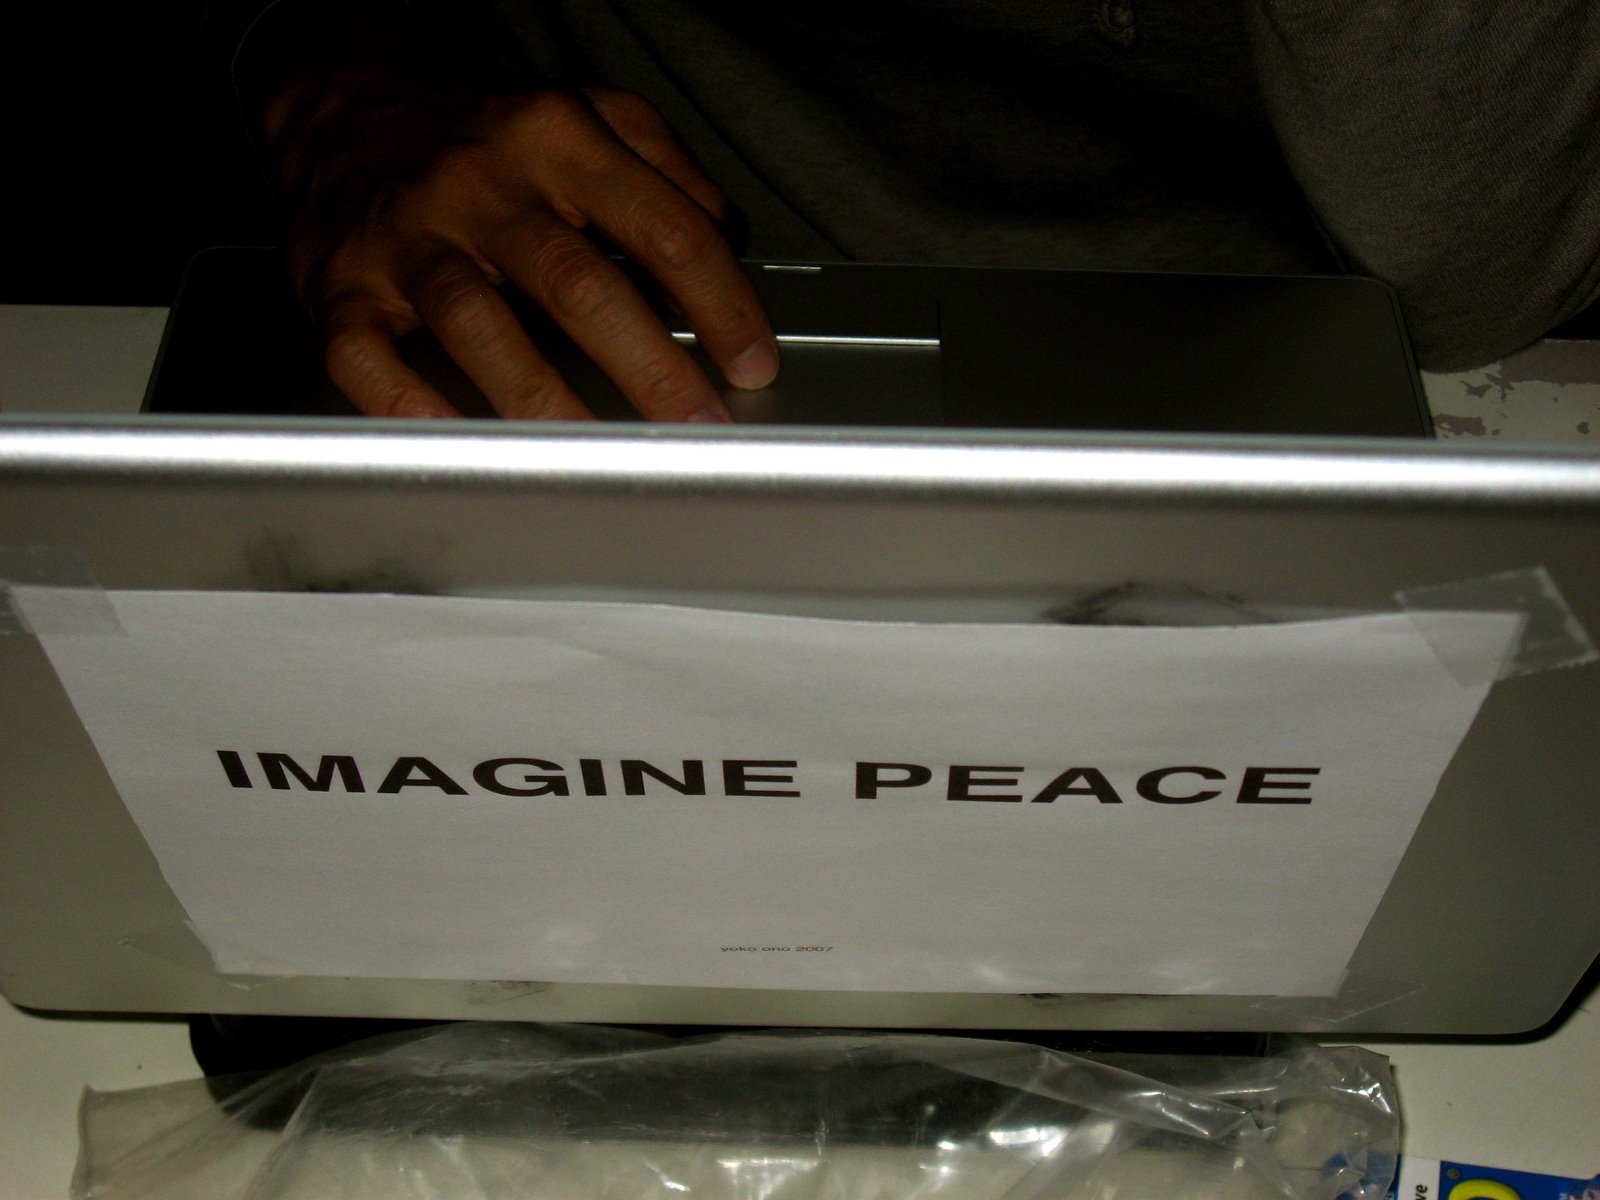 [imagine_peace_laptop.jpg]